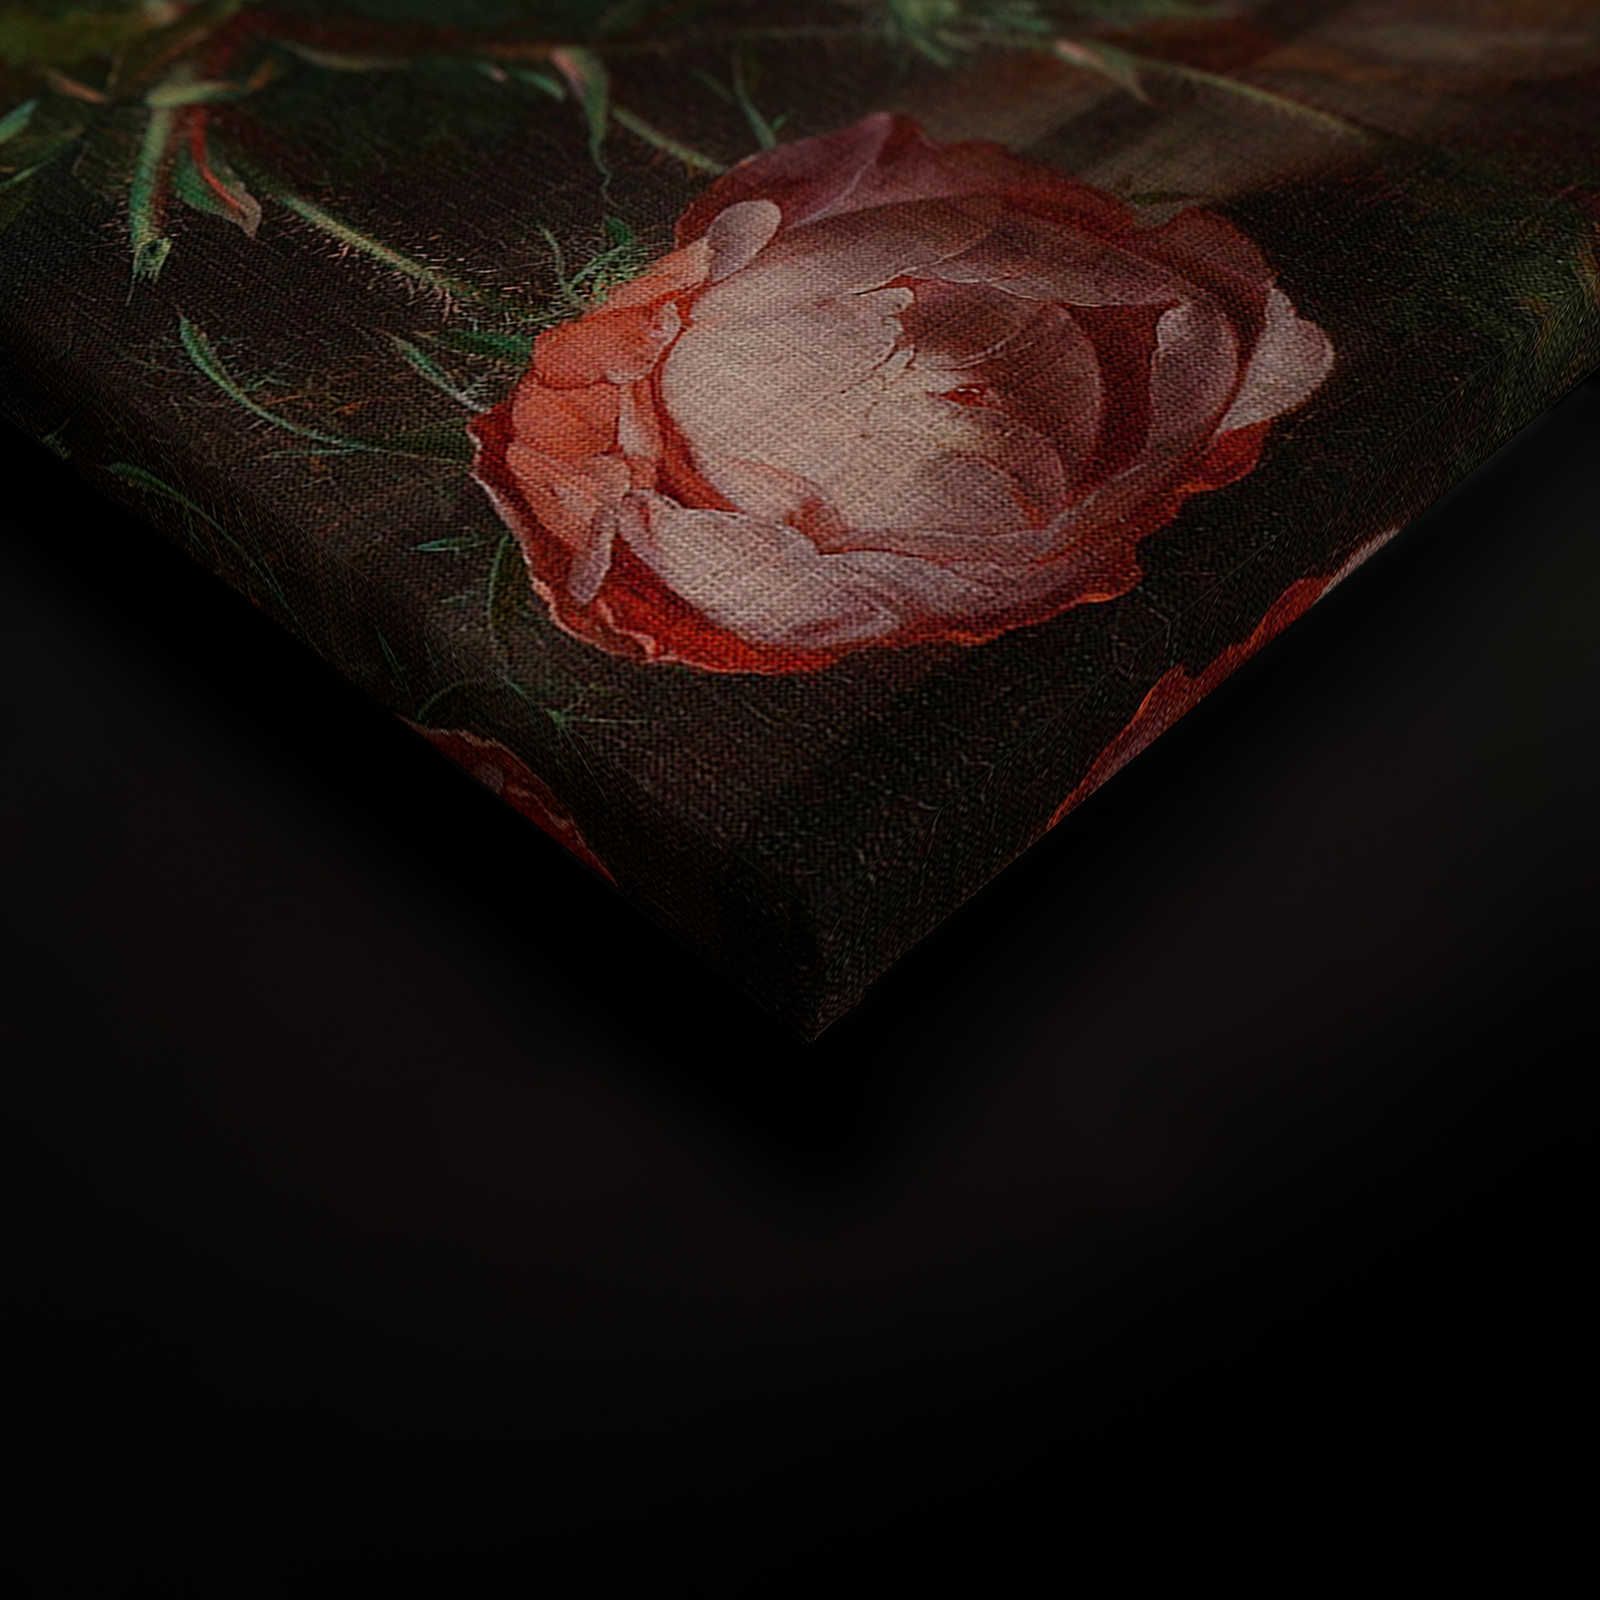             Studio d'artista 3 - Pittura su tela Fiori Natura morta - 0,60 m x 0,90 m
        